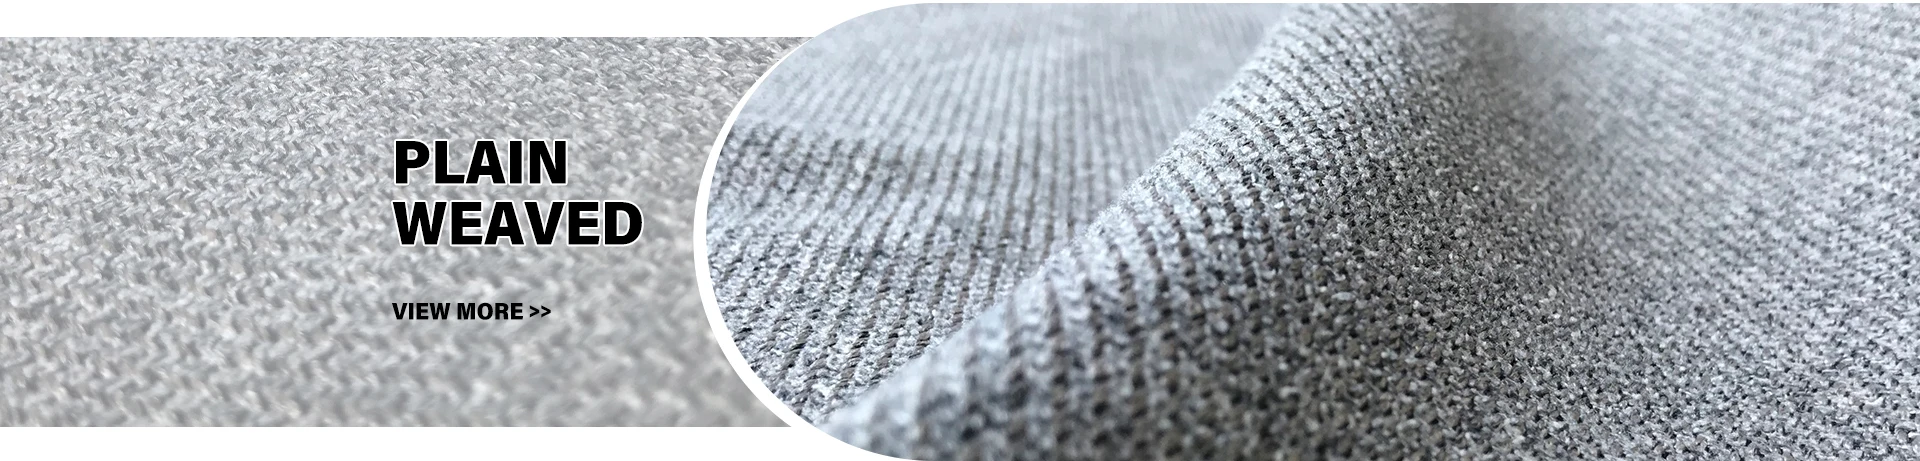 Tongxiang Run & Fun Textiles Co., Ltd. - Sofa Fabric, Upholstery Fabric